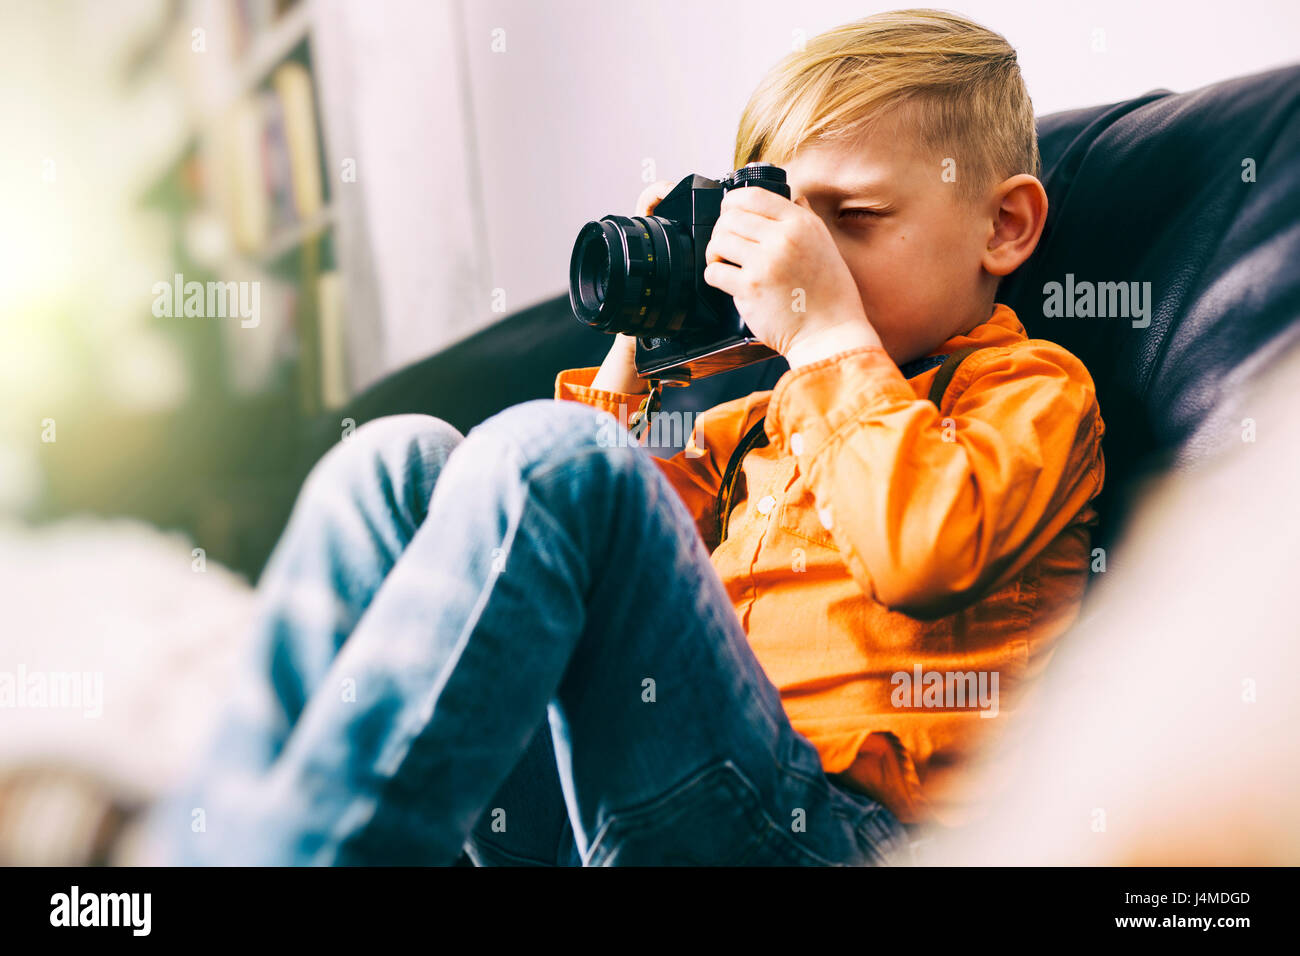 Caucasian boy sitting on sofa using camera Stock Photo